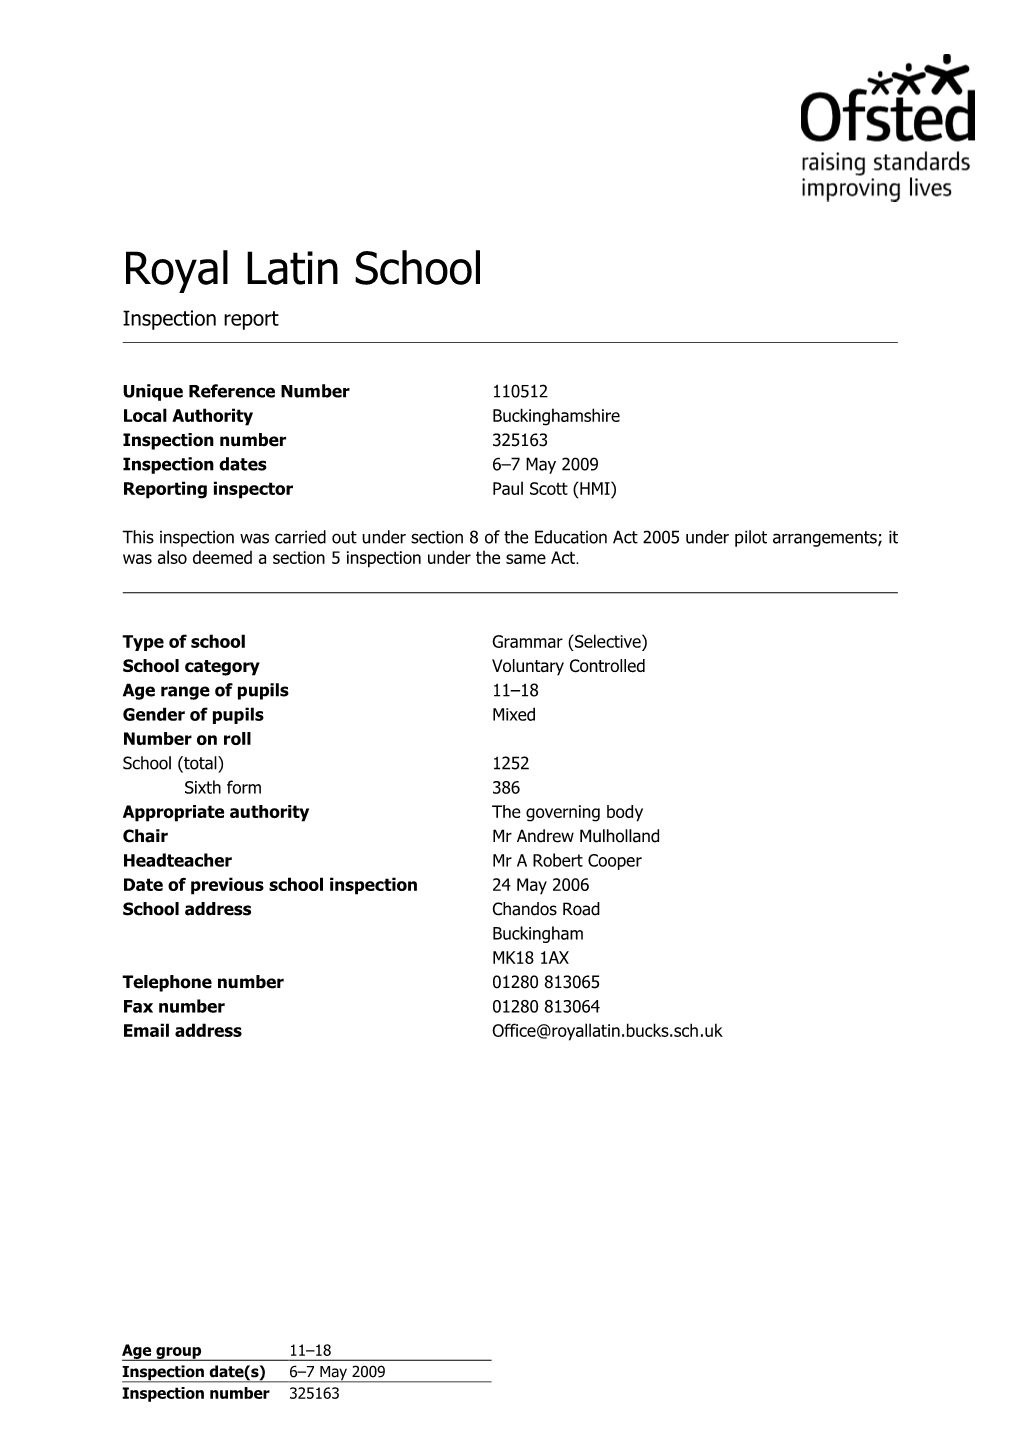 Royal Latin School Inspection Report